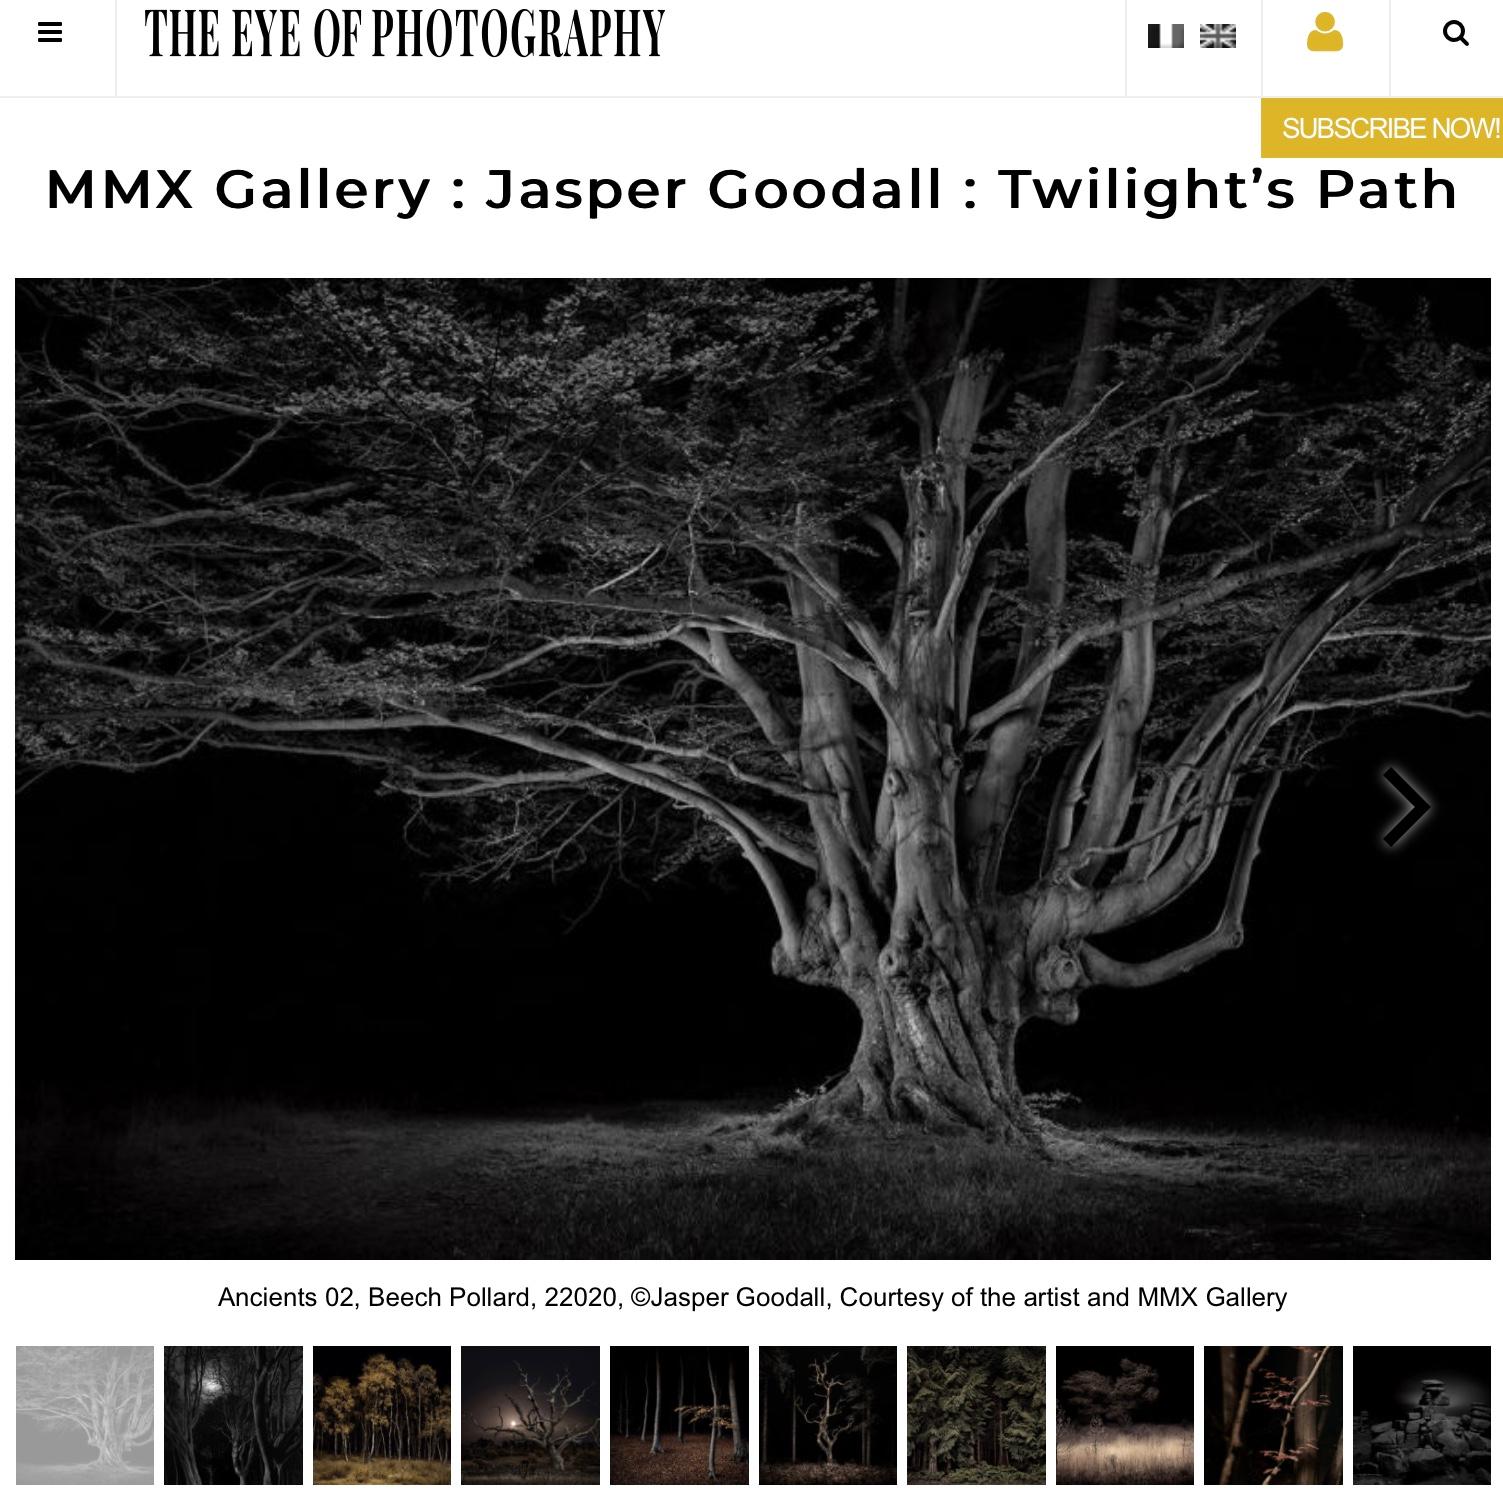 Ancient #02, Beeche Pollard ; paysage d'arbres en noir et blanc - Contemporain Photograph par Jasper Goodall